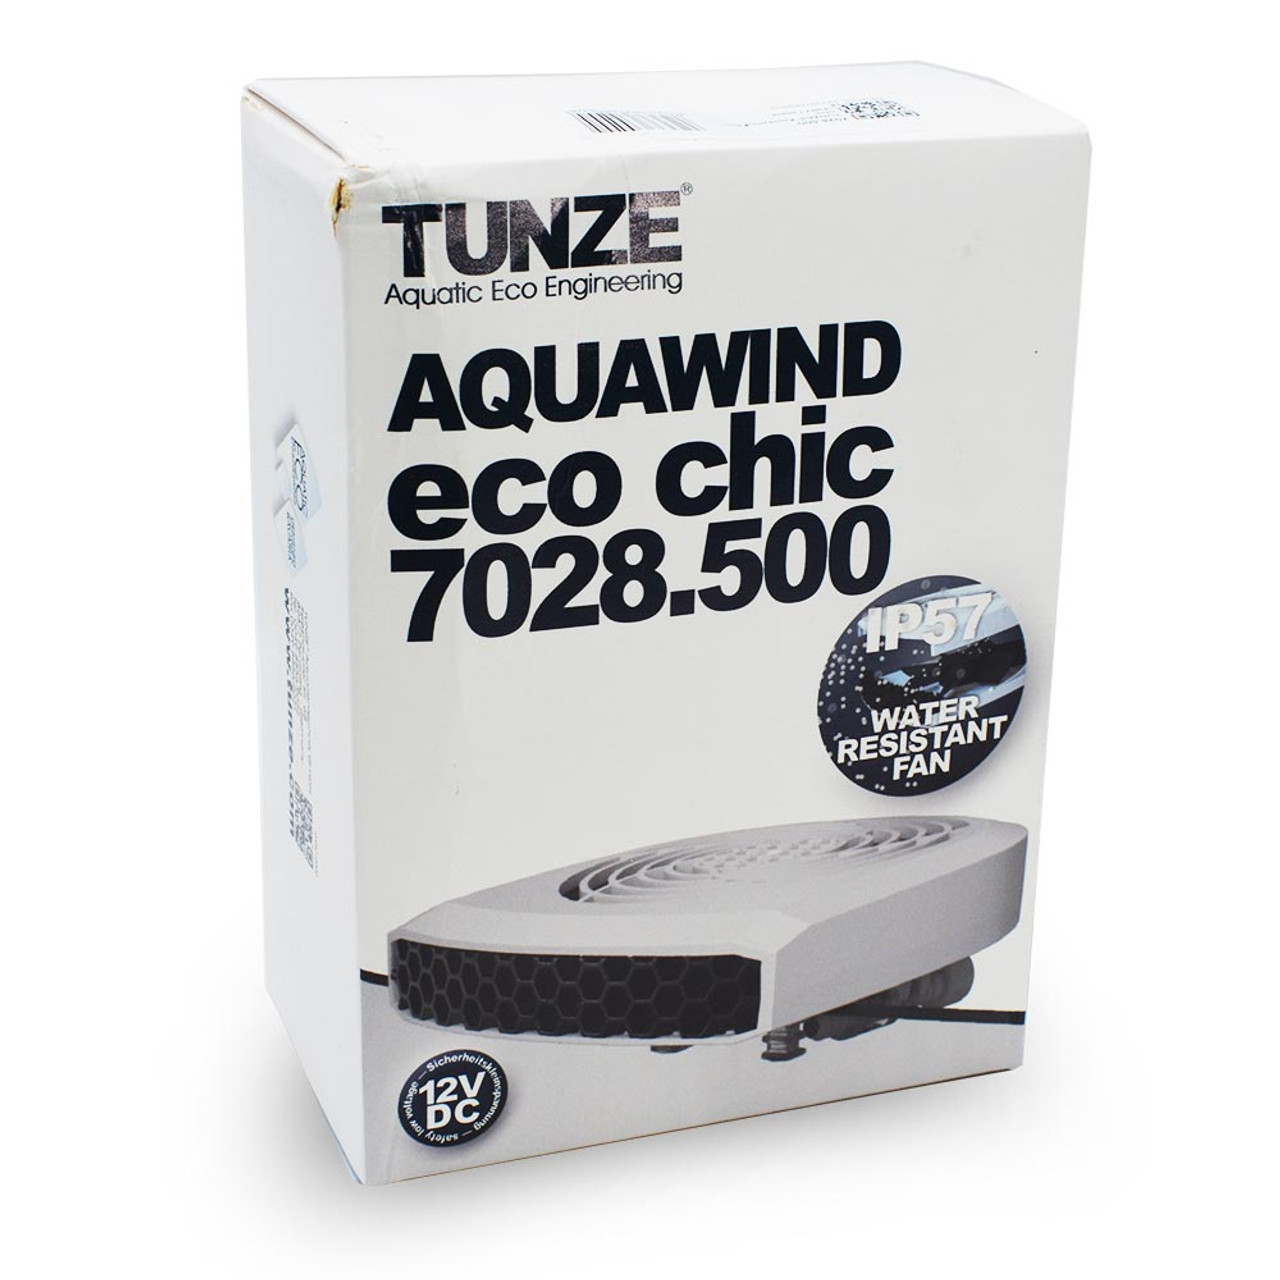 Tunze Aquawind eco chic